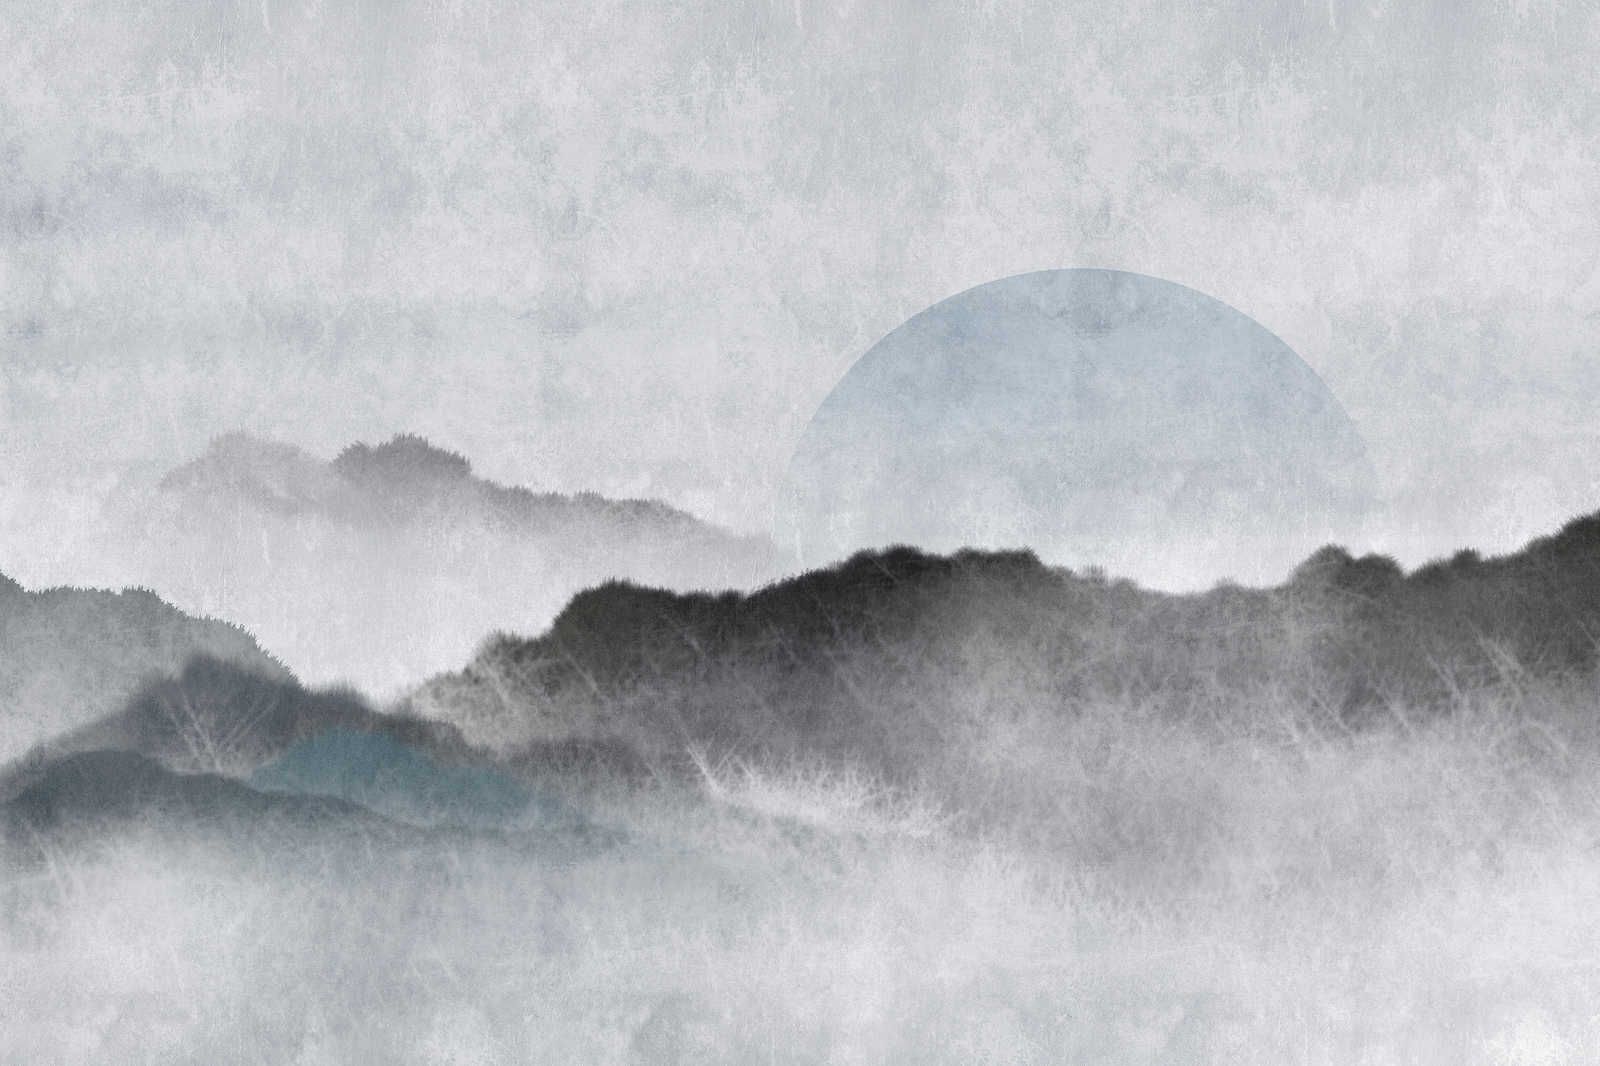             Akaishi 2 - Canvas painting Asian Art Mountain Landscape, Grey & White - 1.20 m x 0.80 m
        